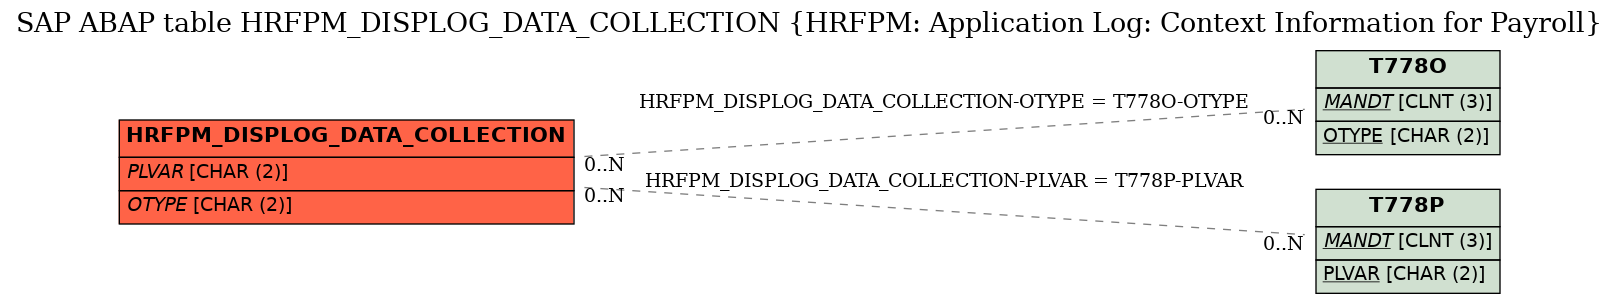 E-R Diagram for table HRFPM_DISPLOG_DATA_COLLECTION (HRFPM: Application Log: Context Information for Payroll)